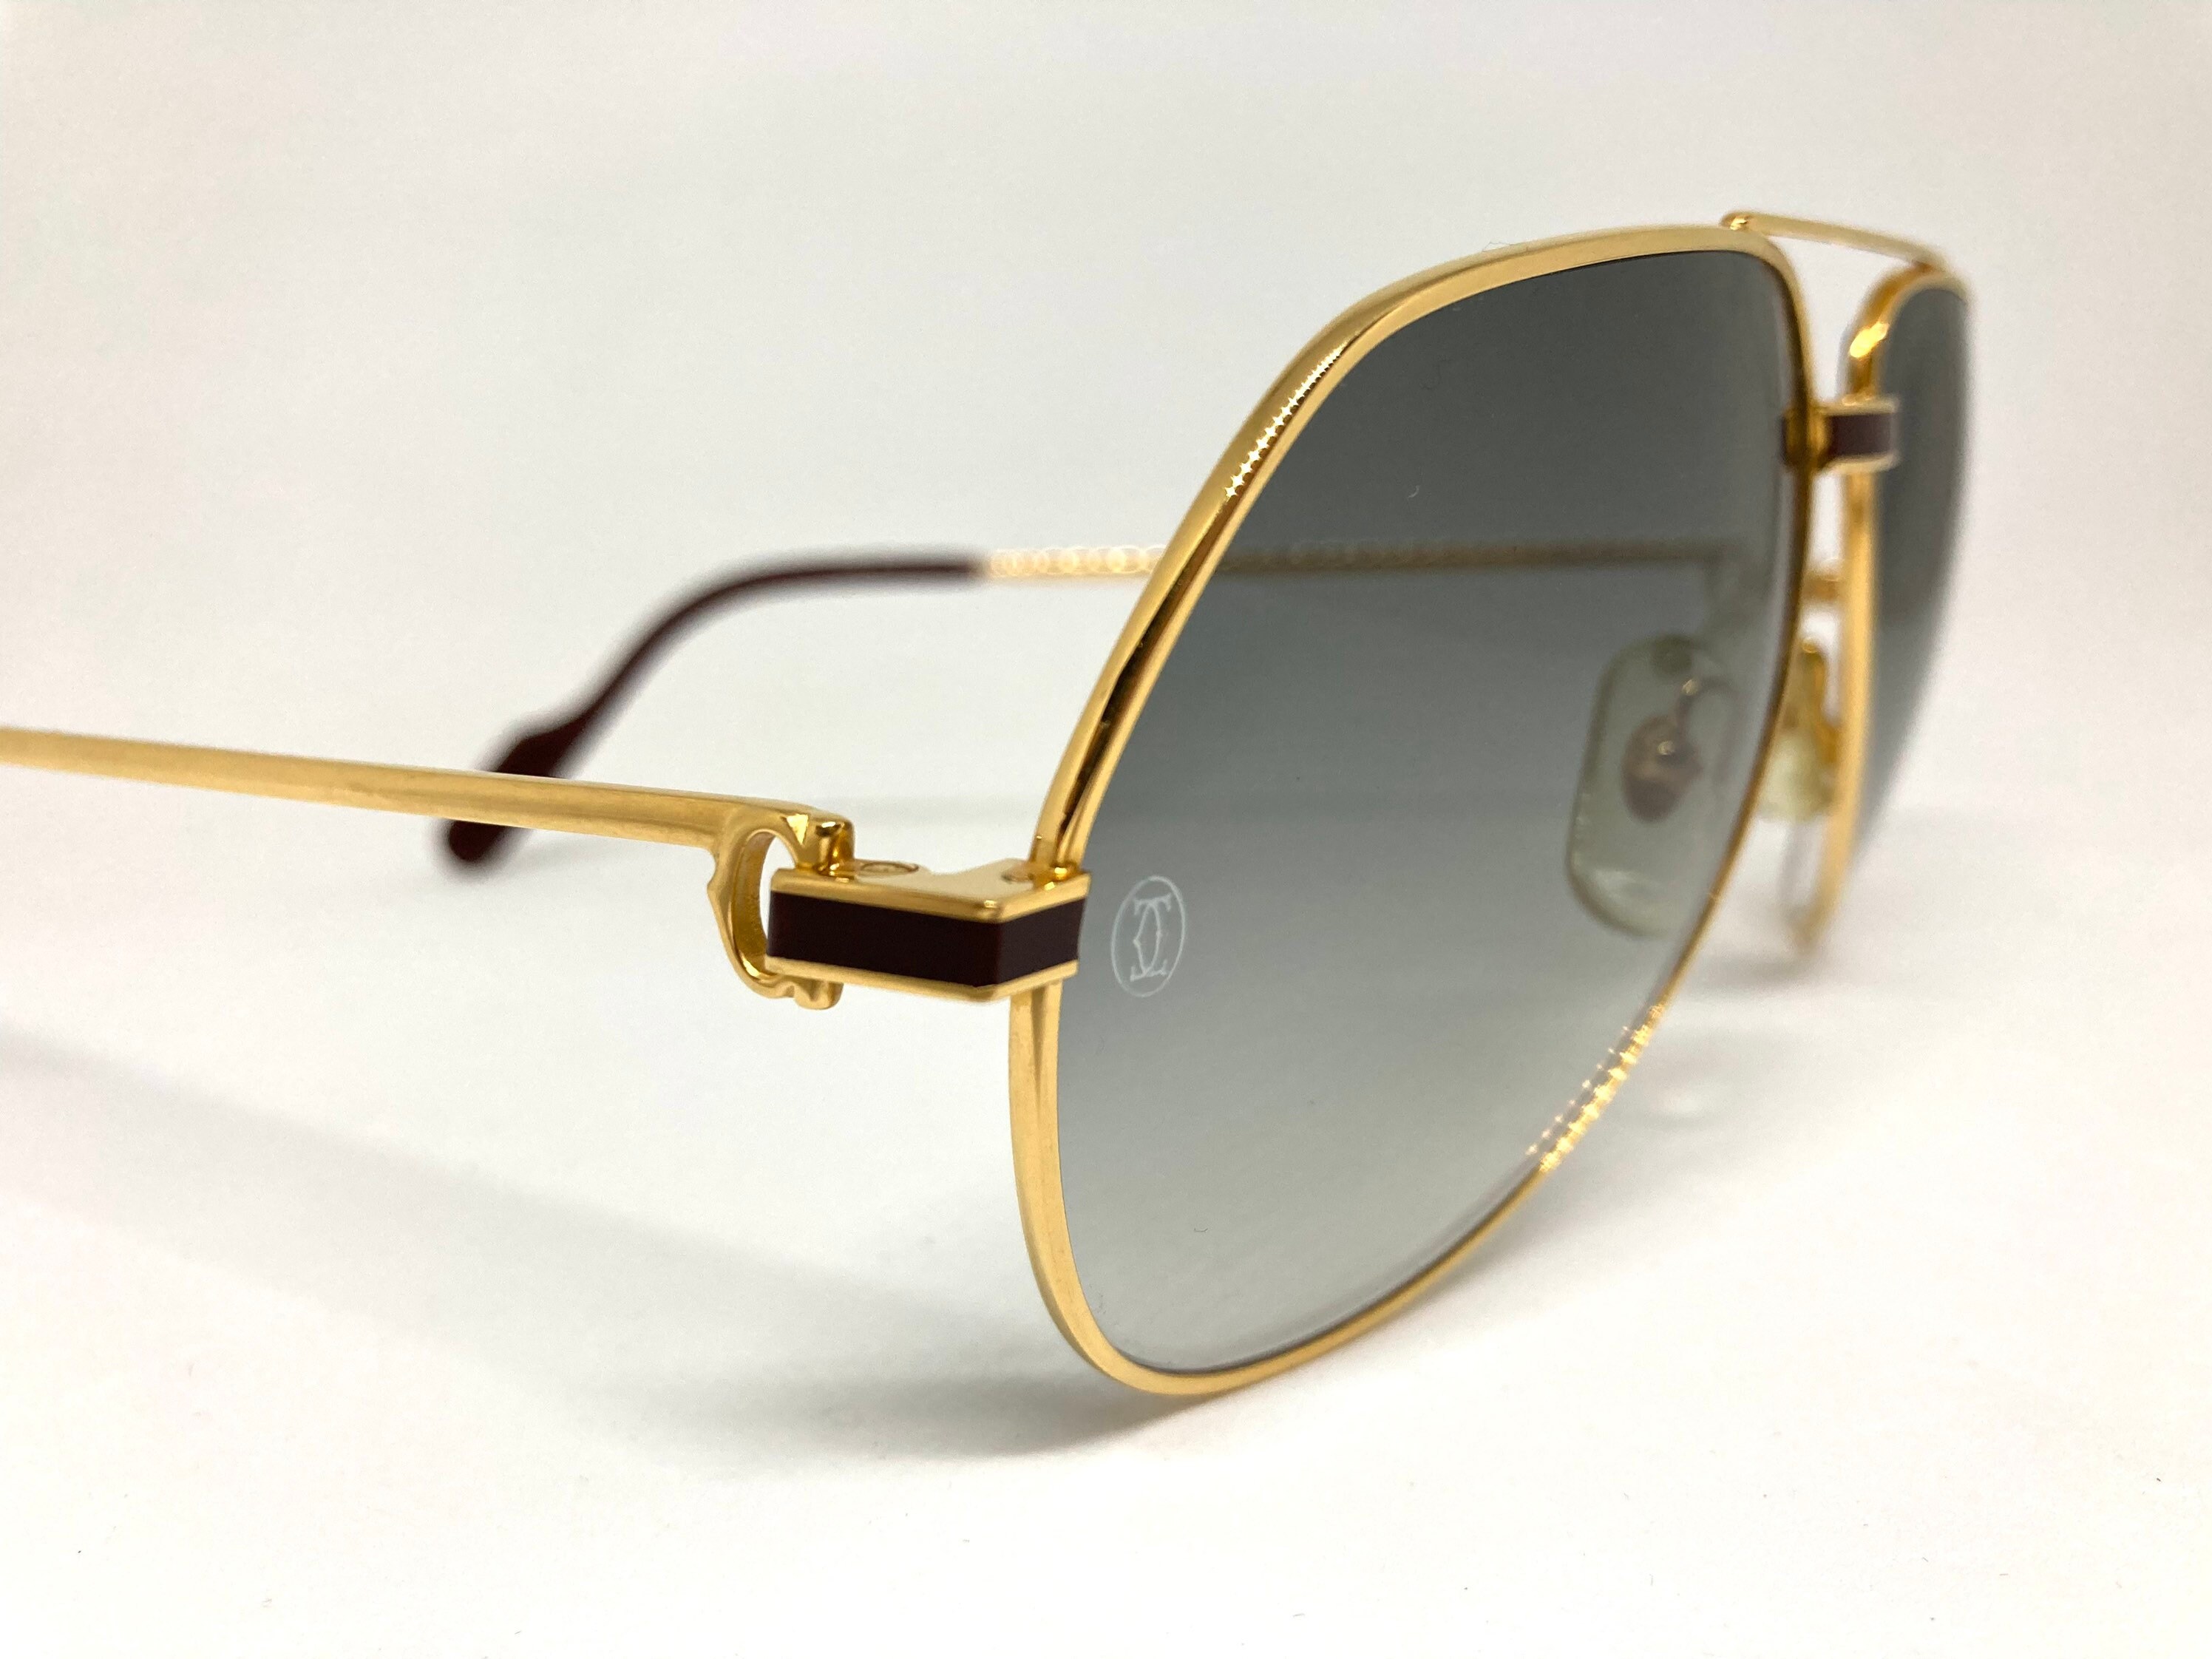 Cartier Vendome legit check help : r/sunglasses